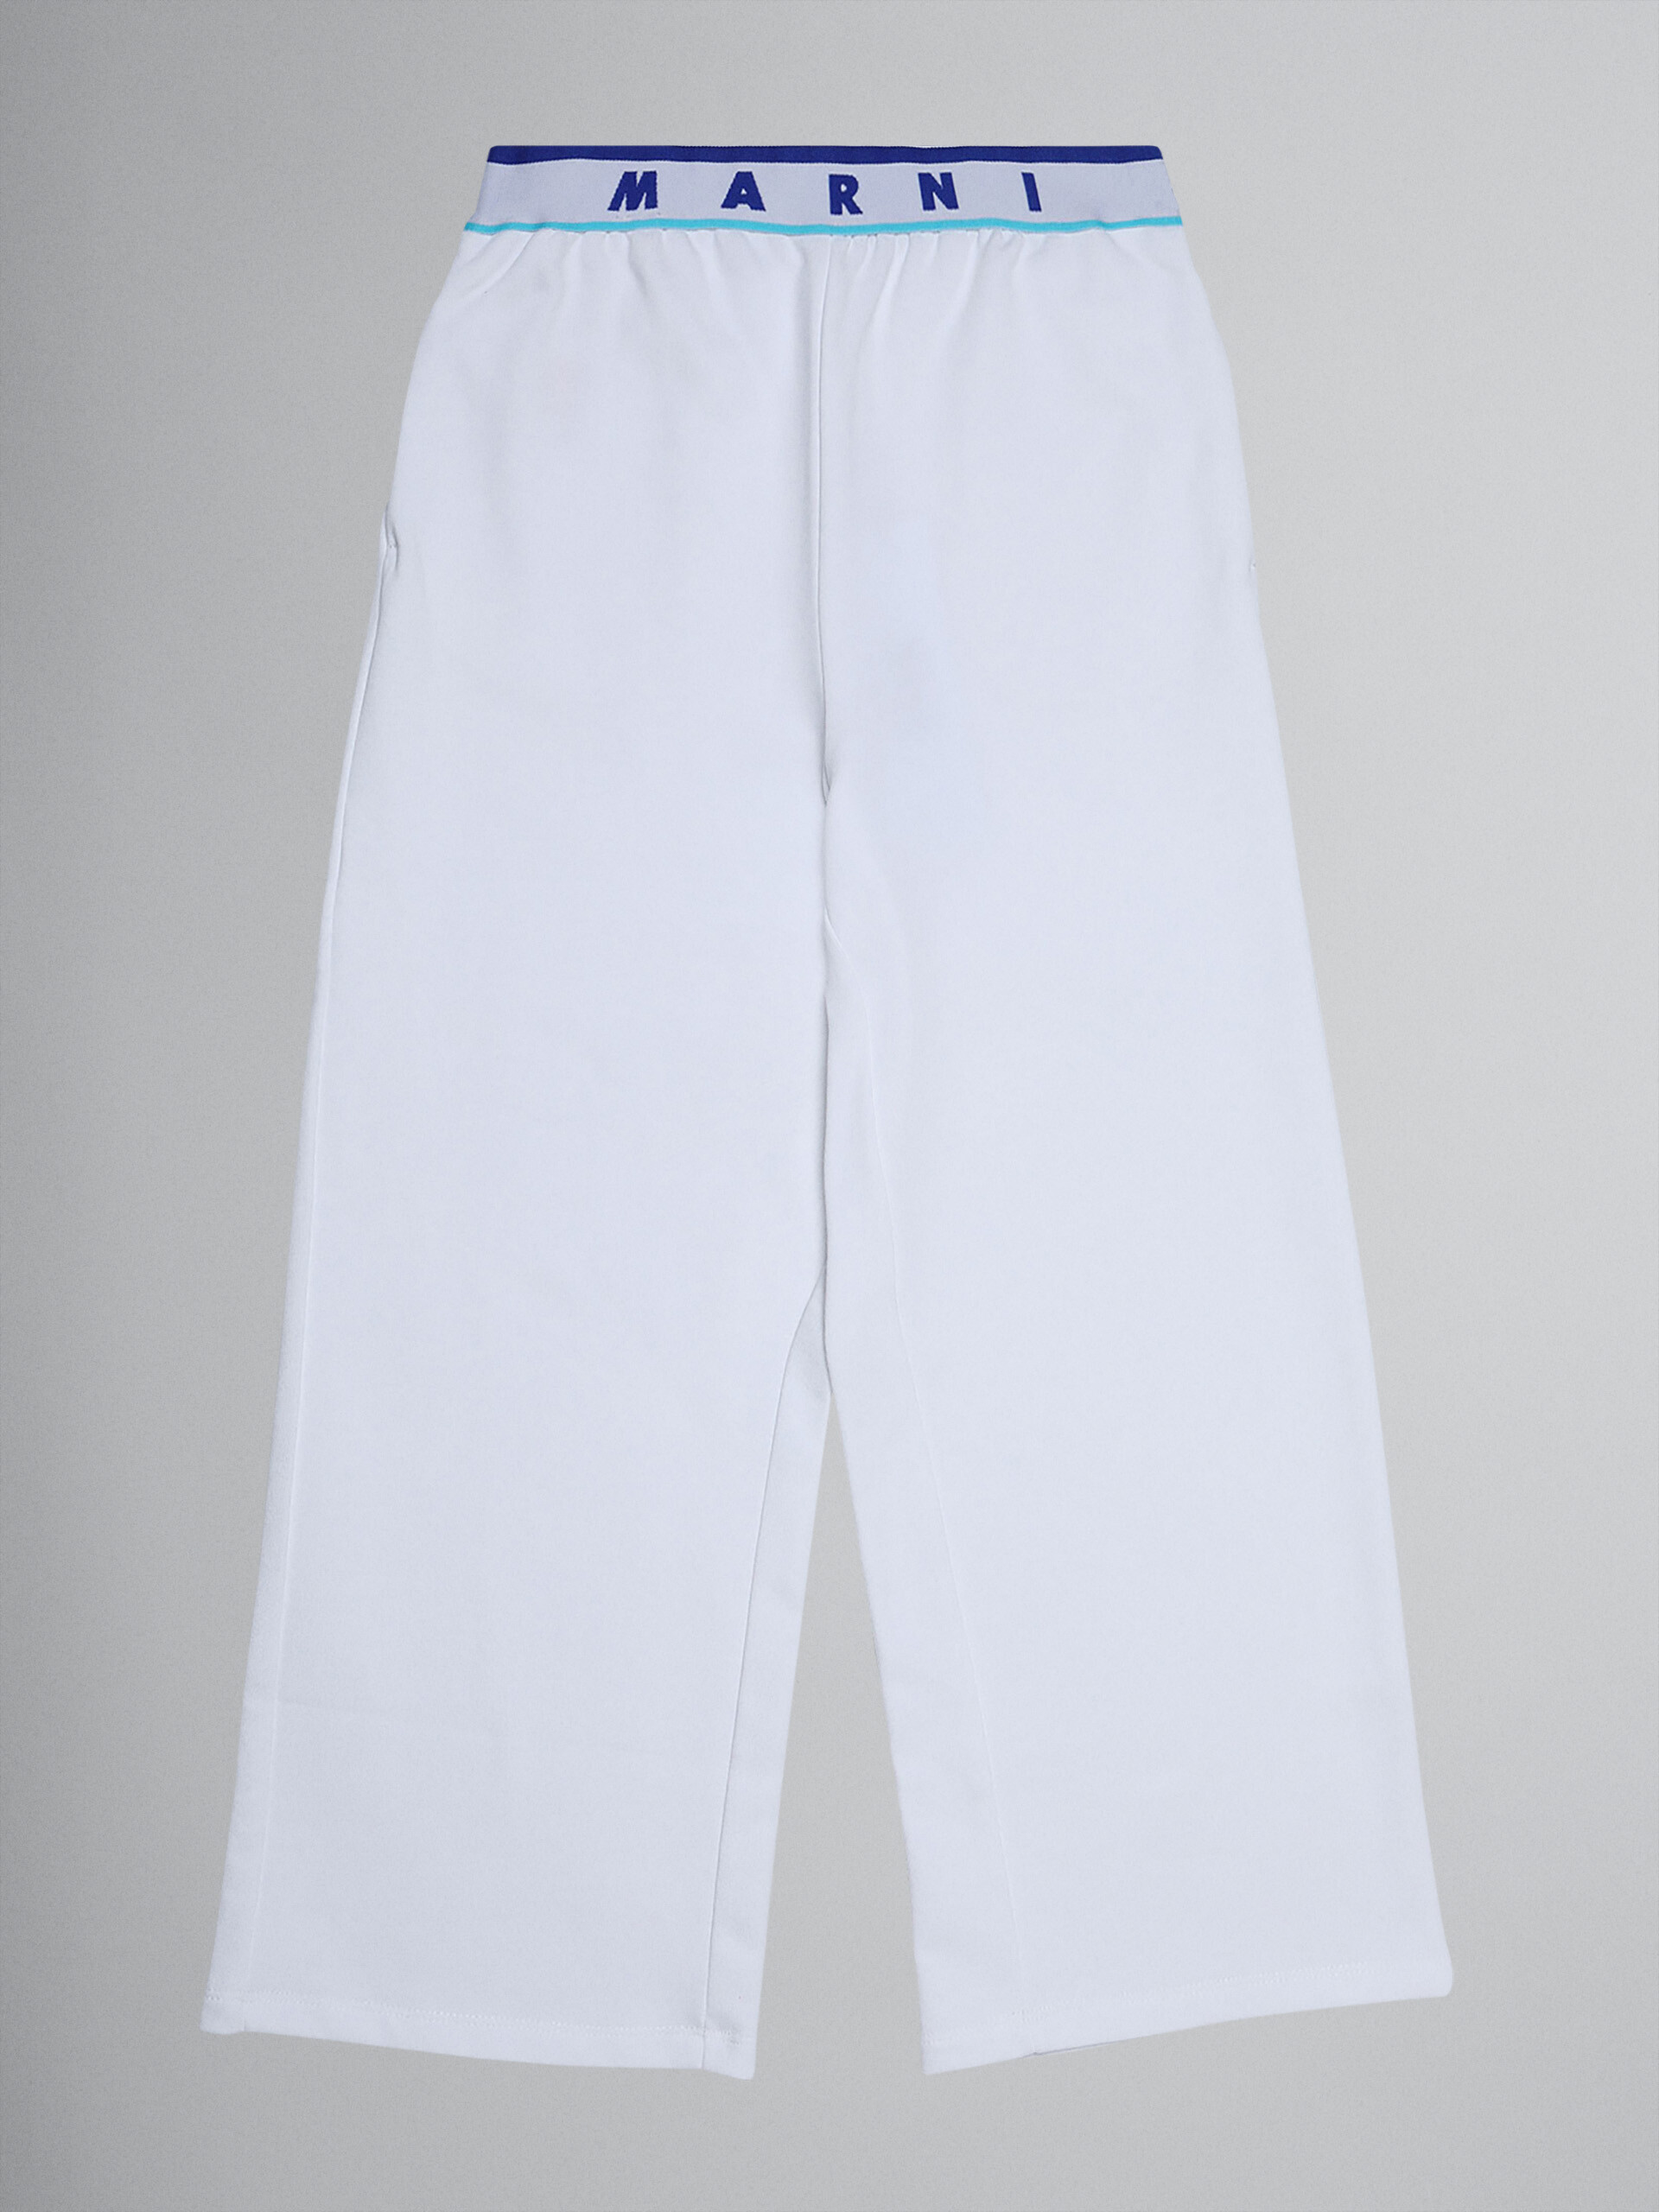 Logo white sweatshirt cotton track pants - Pants - Image 1